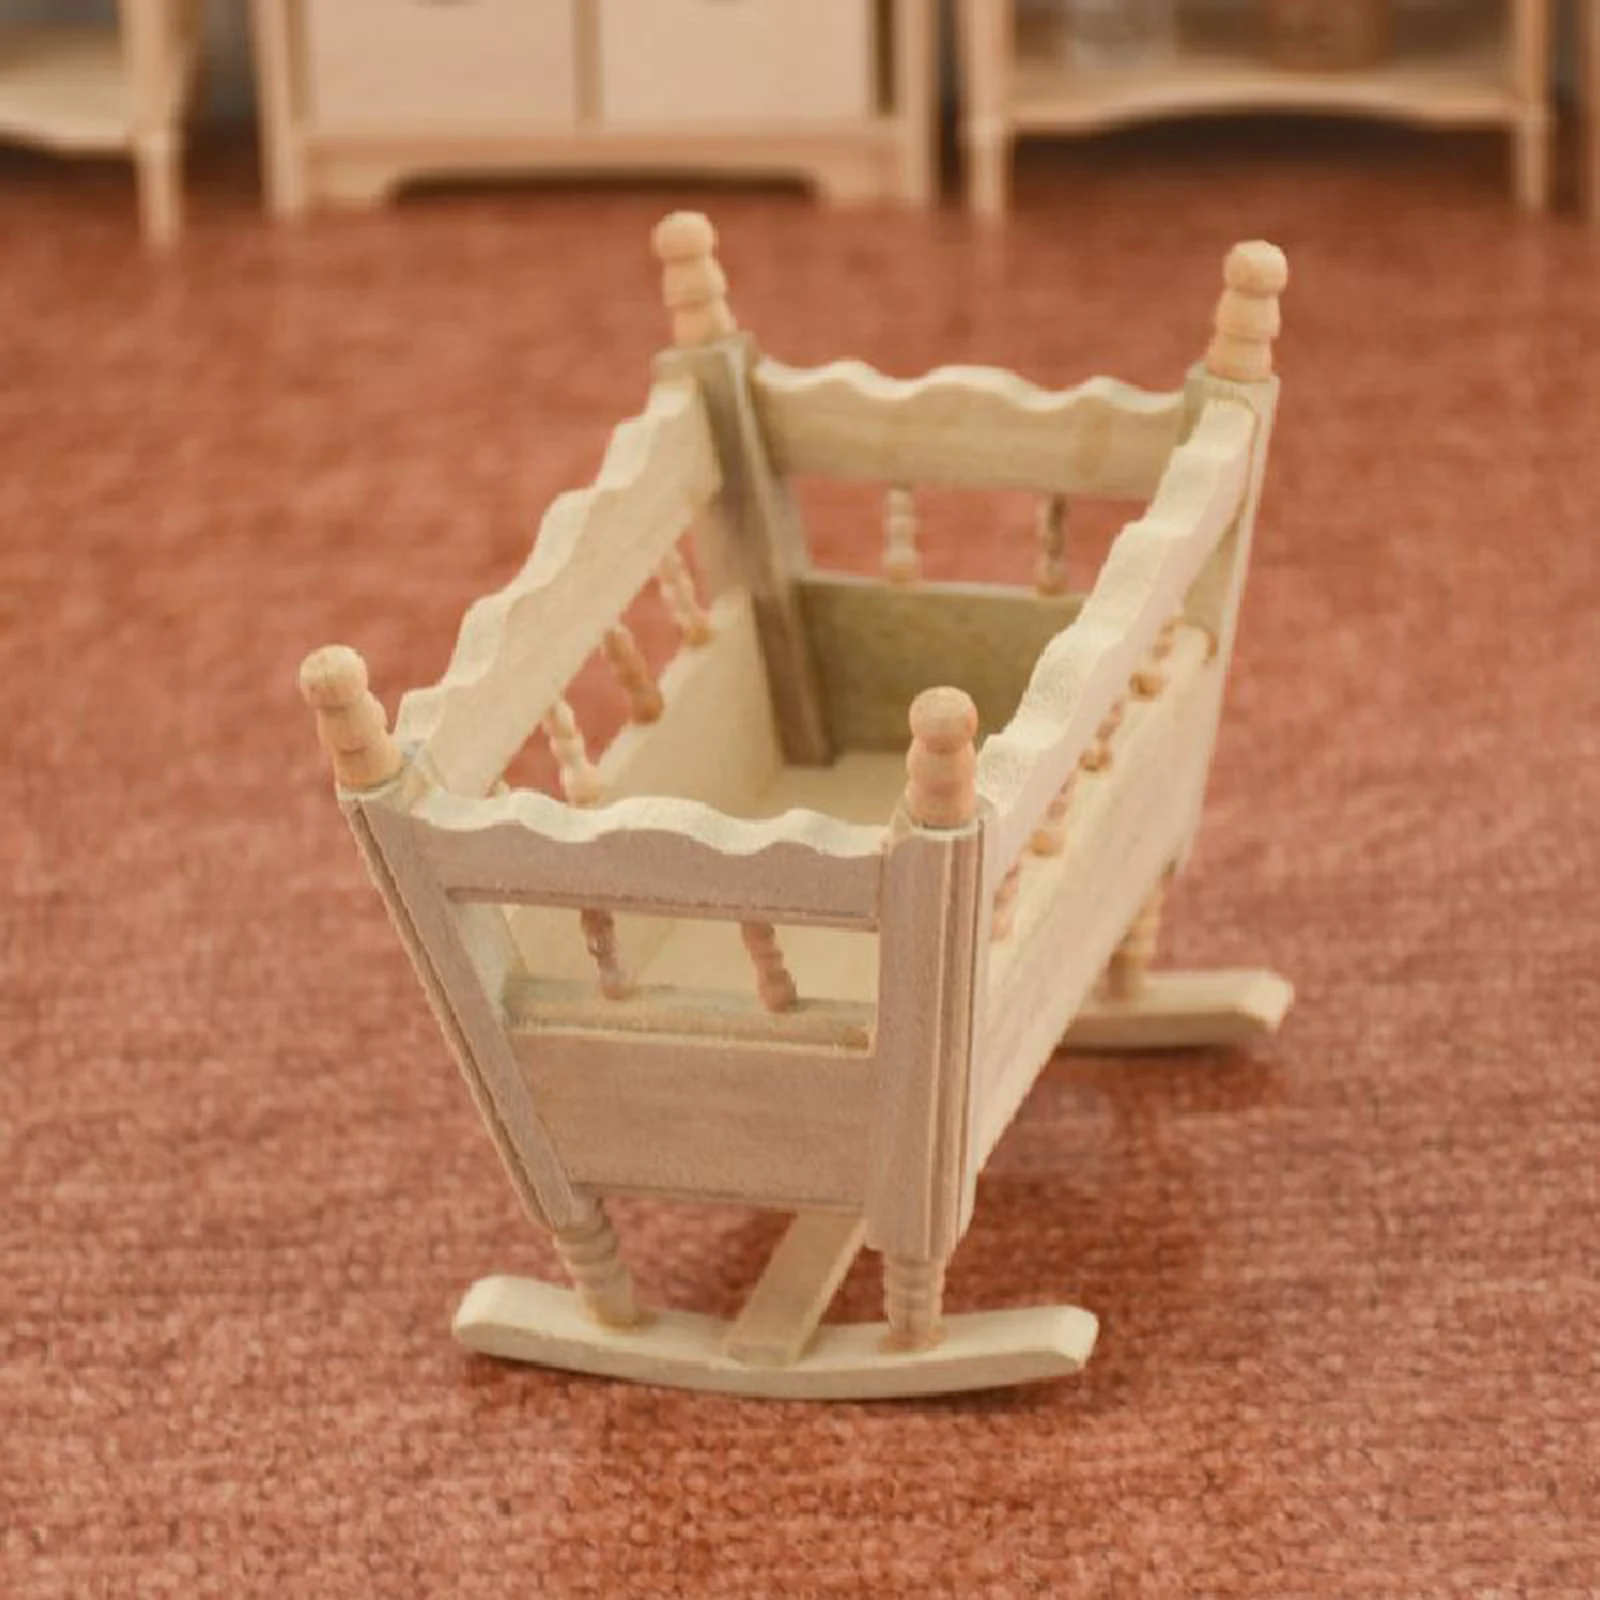 1/12 Dollhouse Miniature Wooden Cradle Model Furniture Landscape Decoration